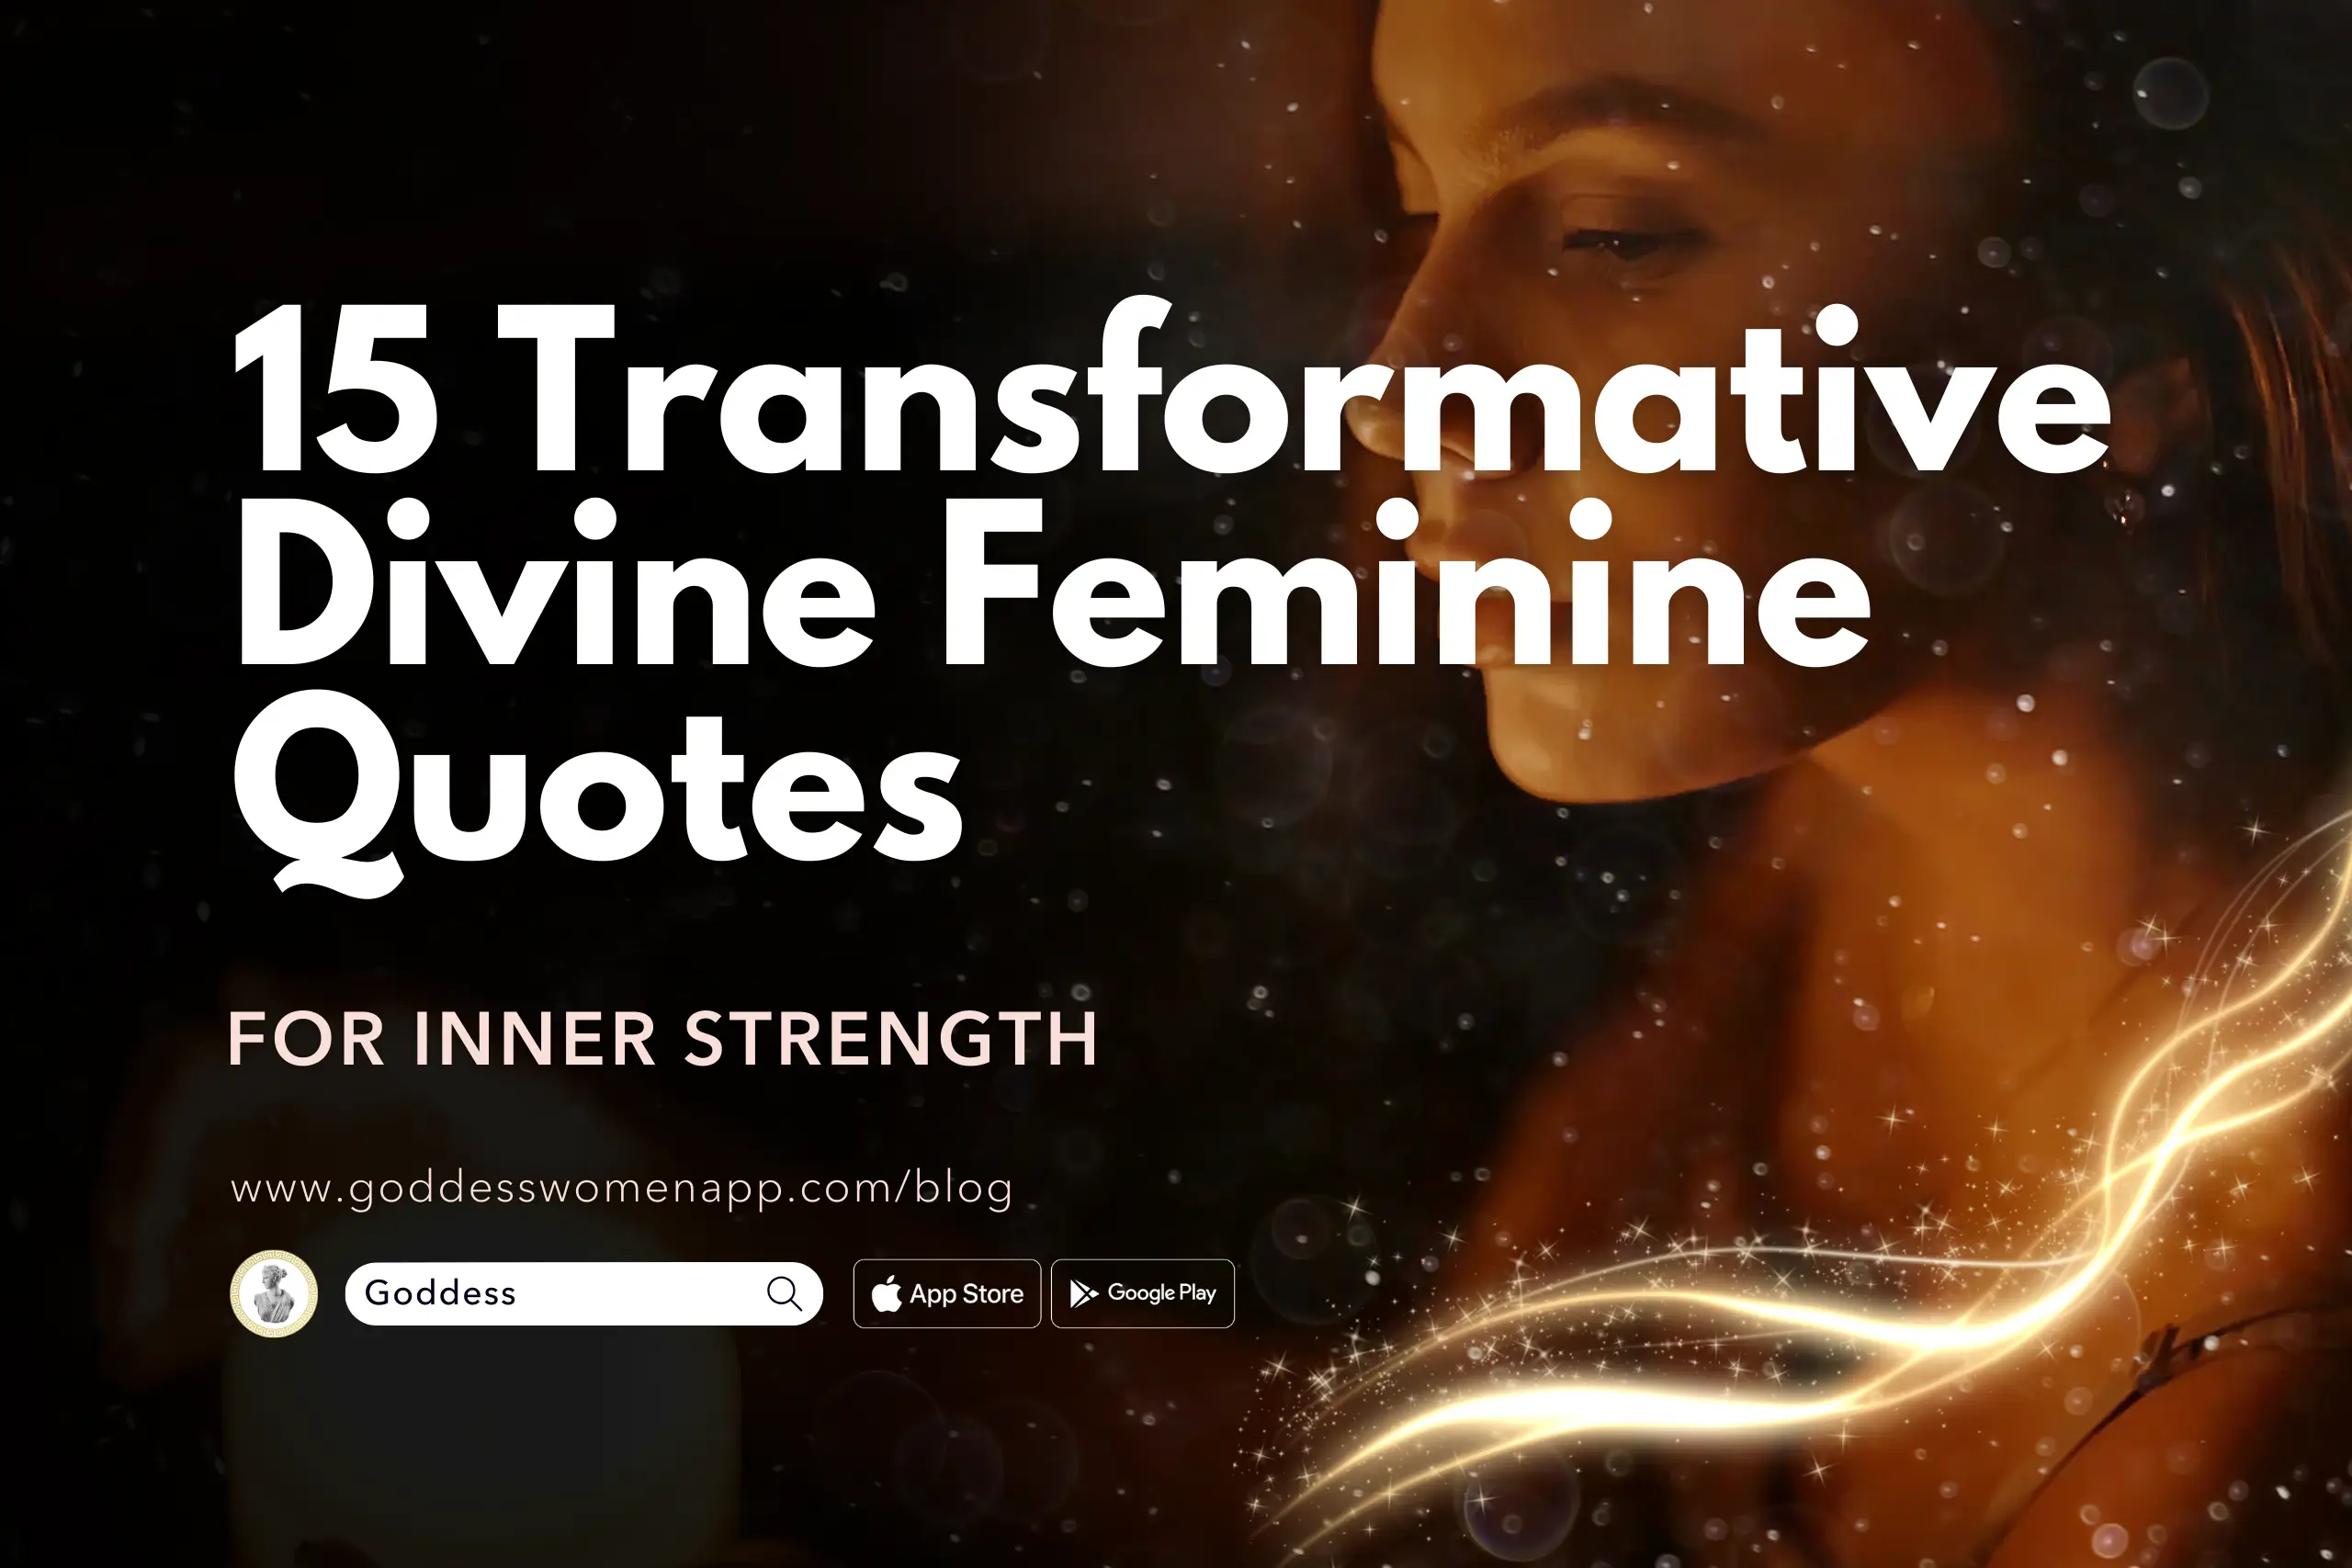 15 Transformative Divine Feminine Quotes for Inner Strength